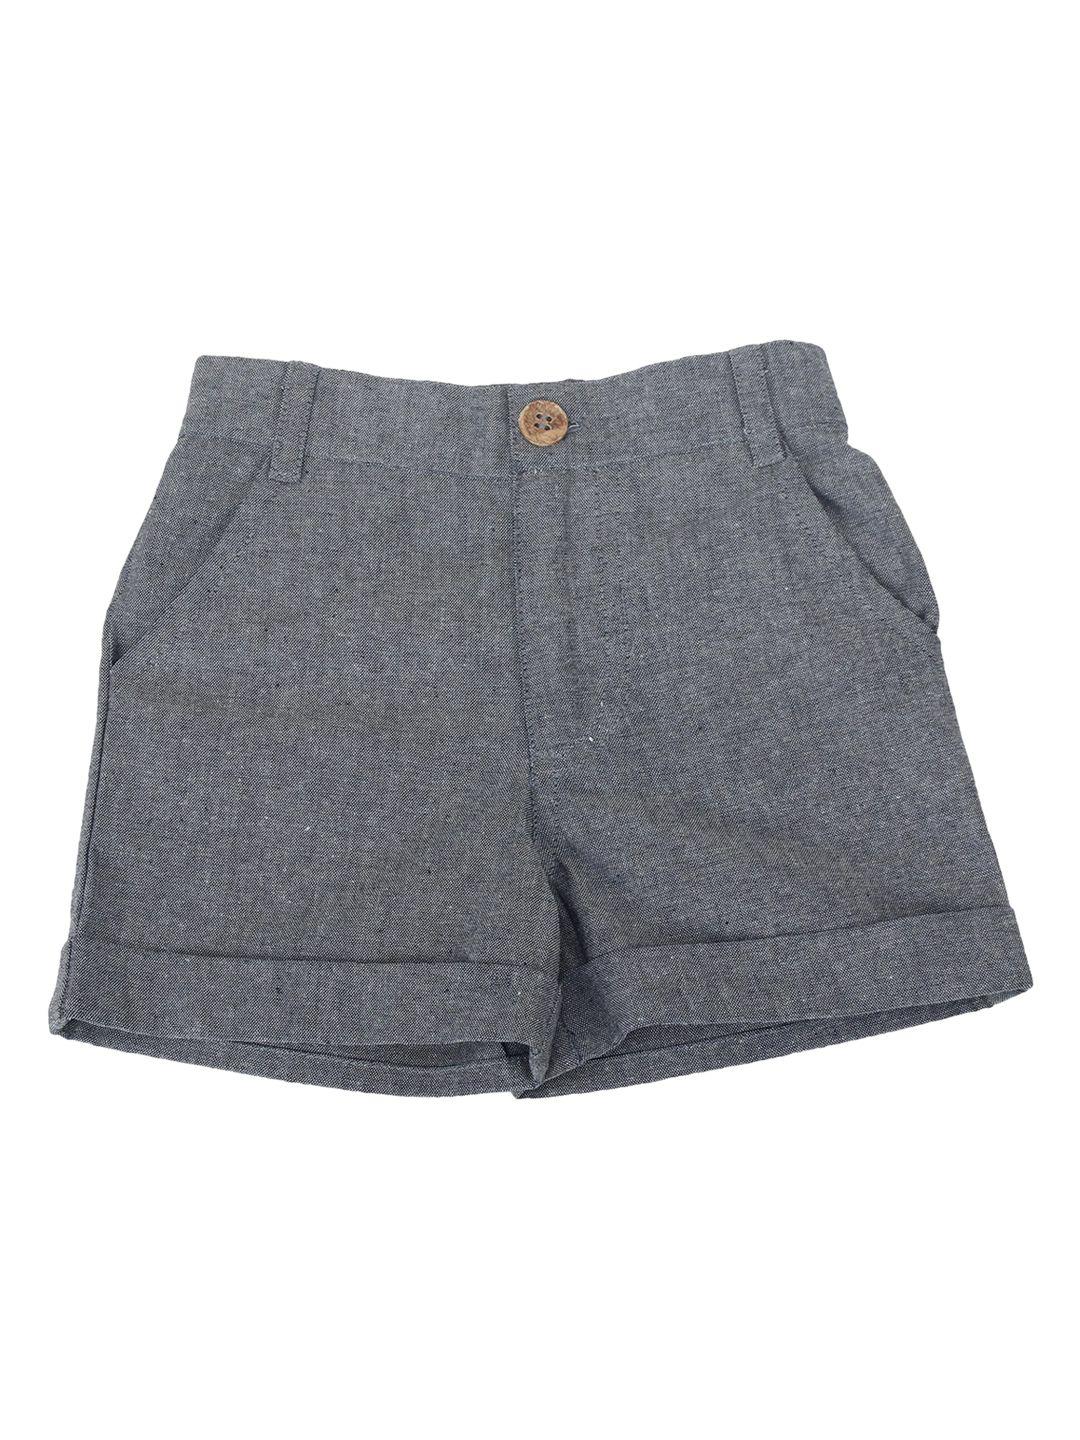 nino bambino unisex kids grey regular shorts